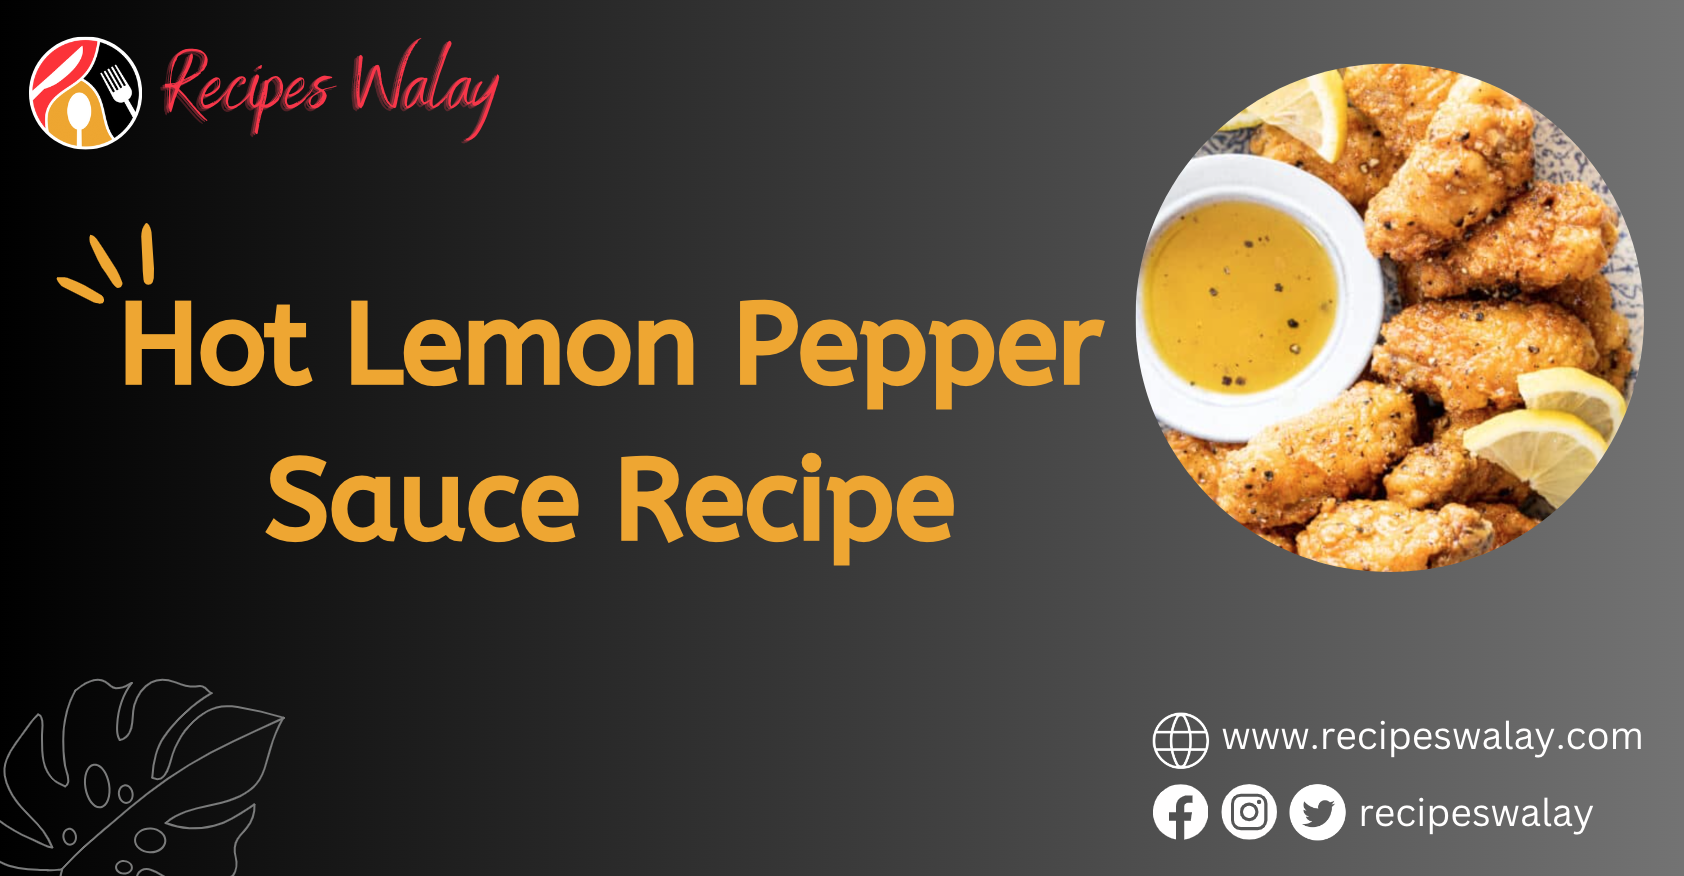 Hot Lemon Pepper Sauce Recipe